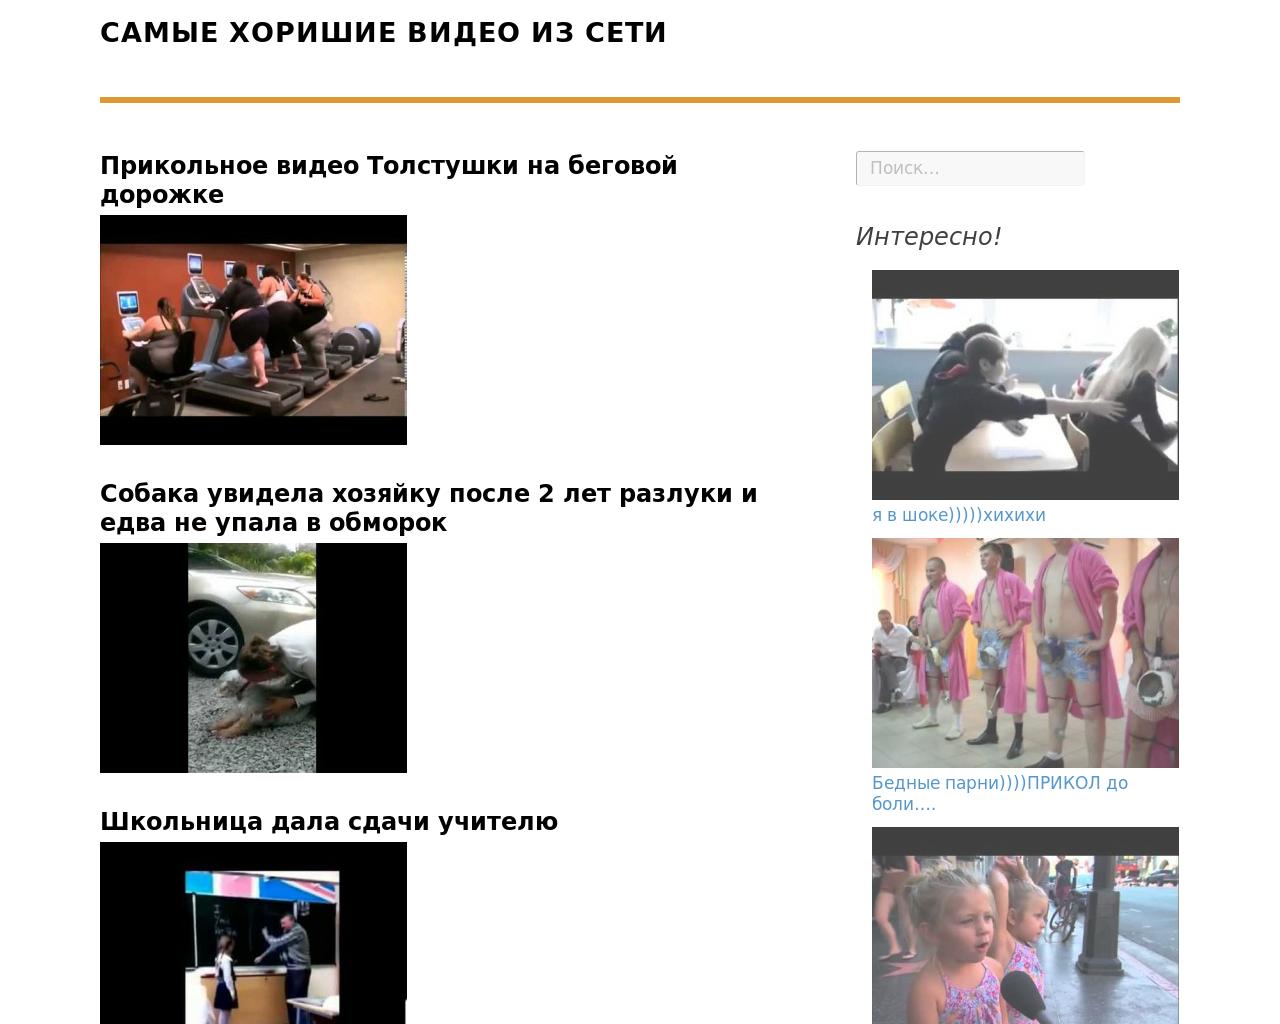 Изображение сайта video-e.ru в разрешении 1280x1024